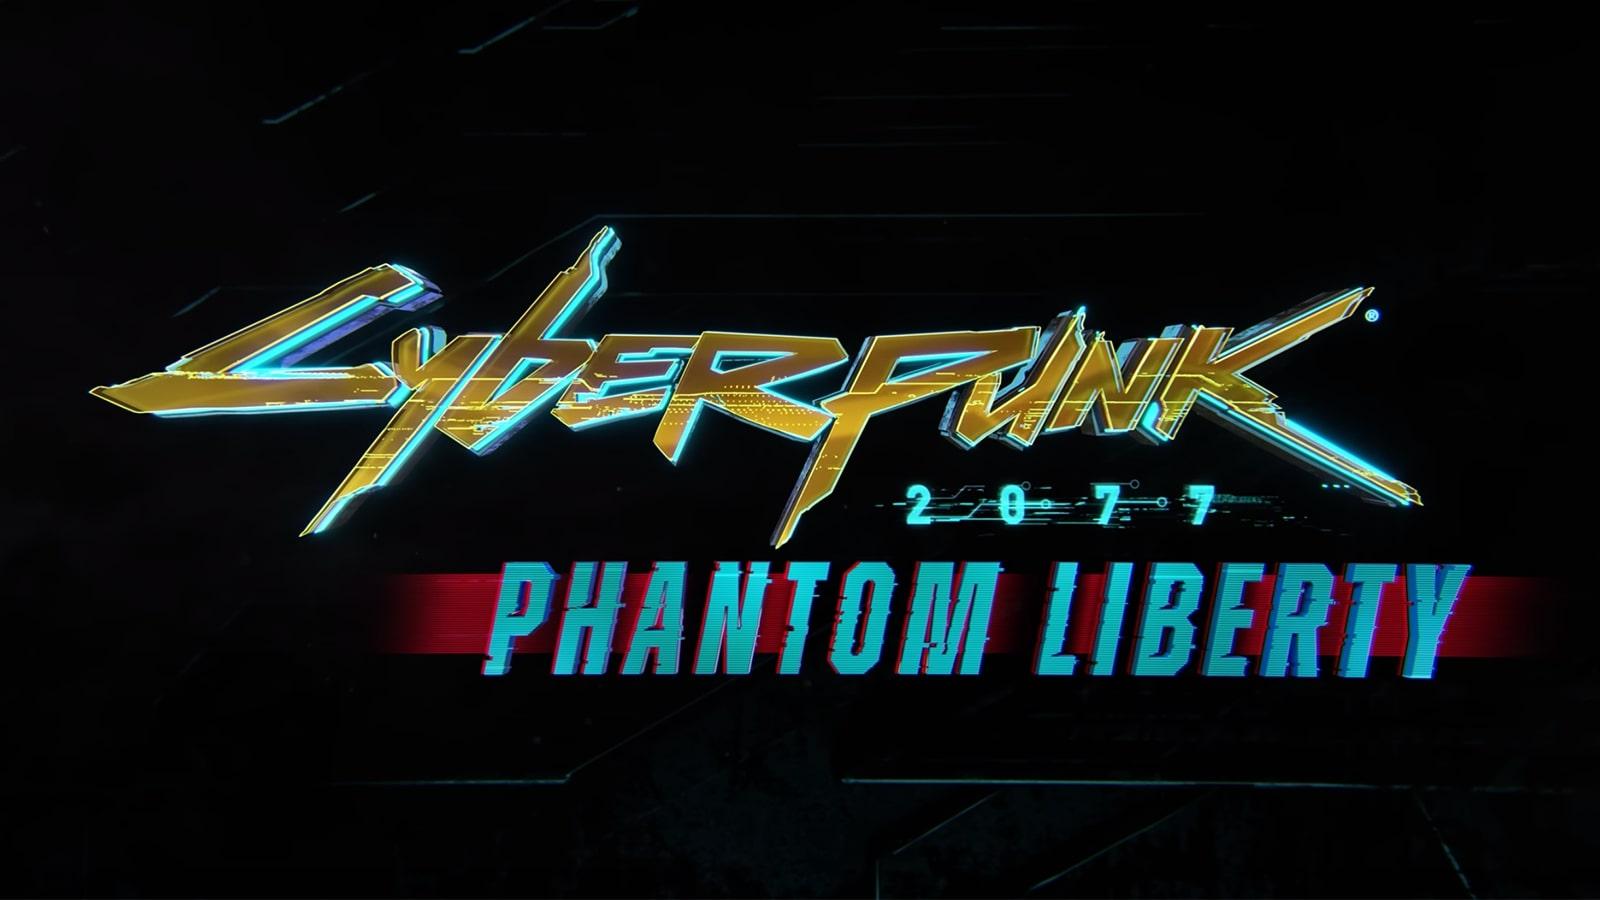 Phantom Liberty DLC Cyberpunk 2077 header image